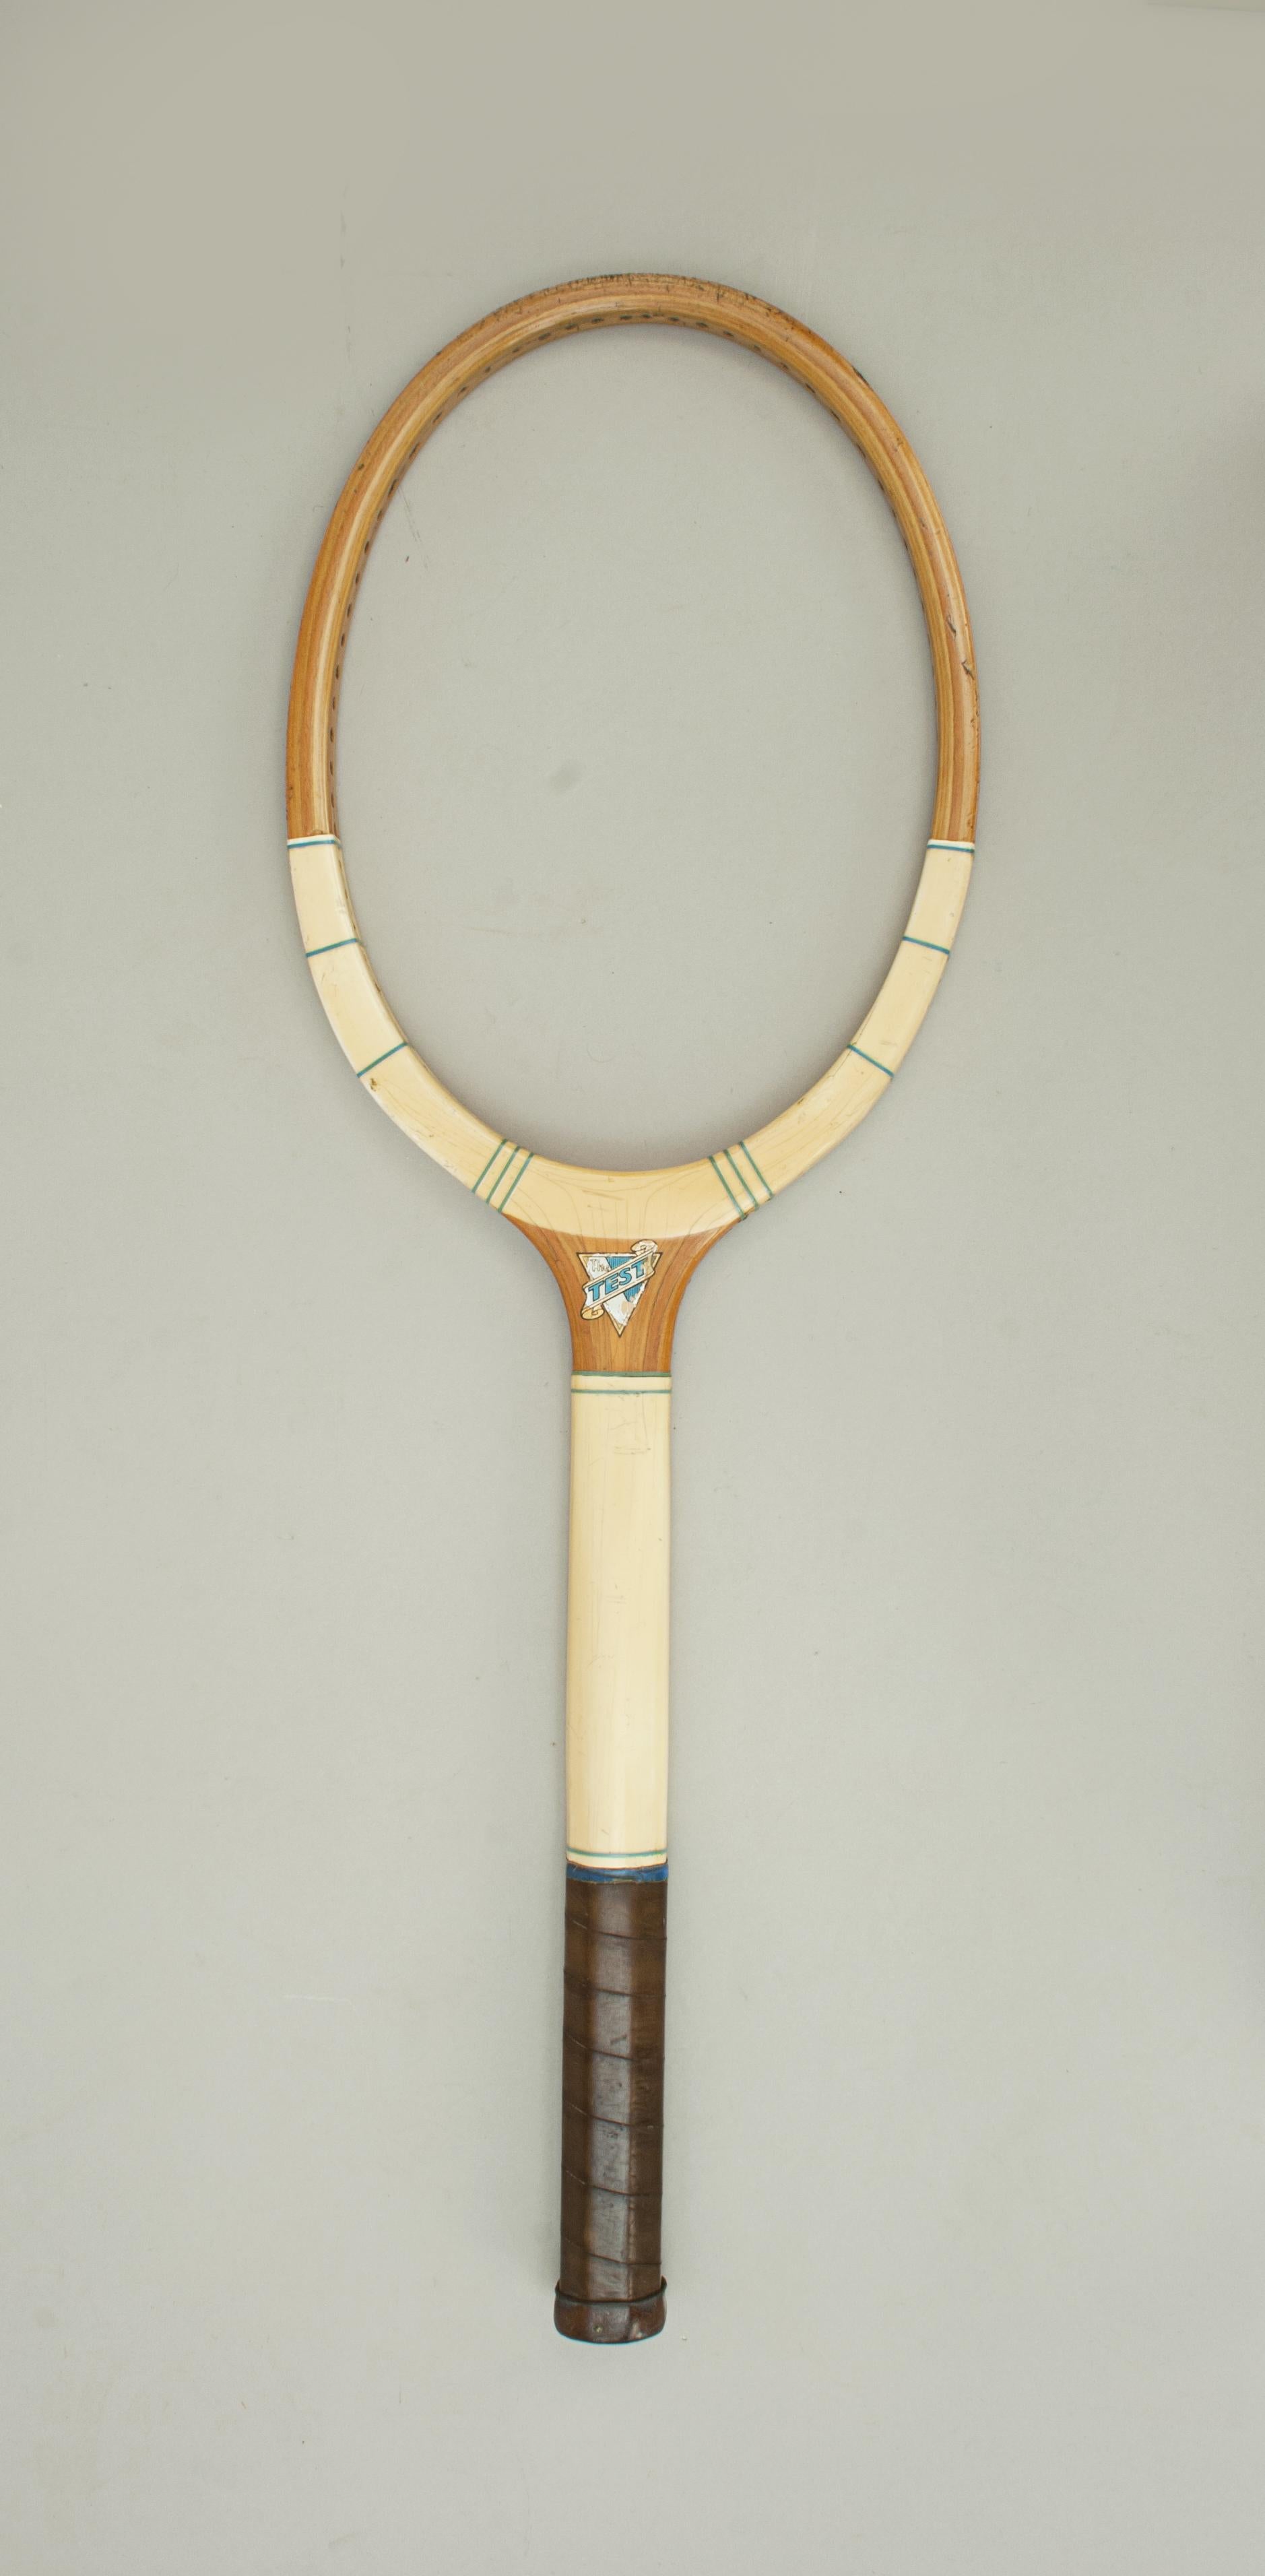 English Vintage Lawn Tennis Racket, the Test by Stevenson